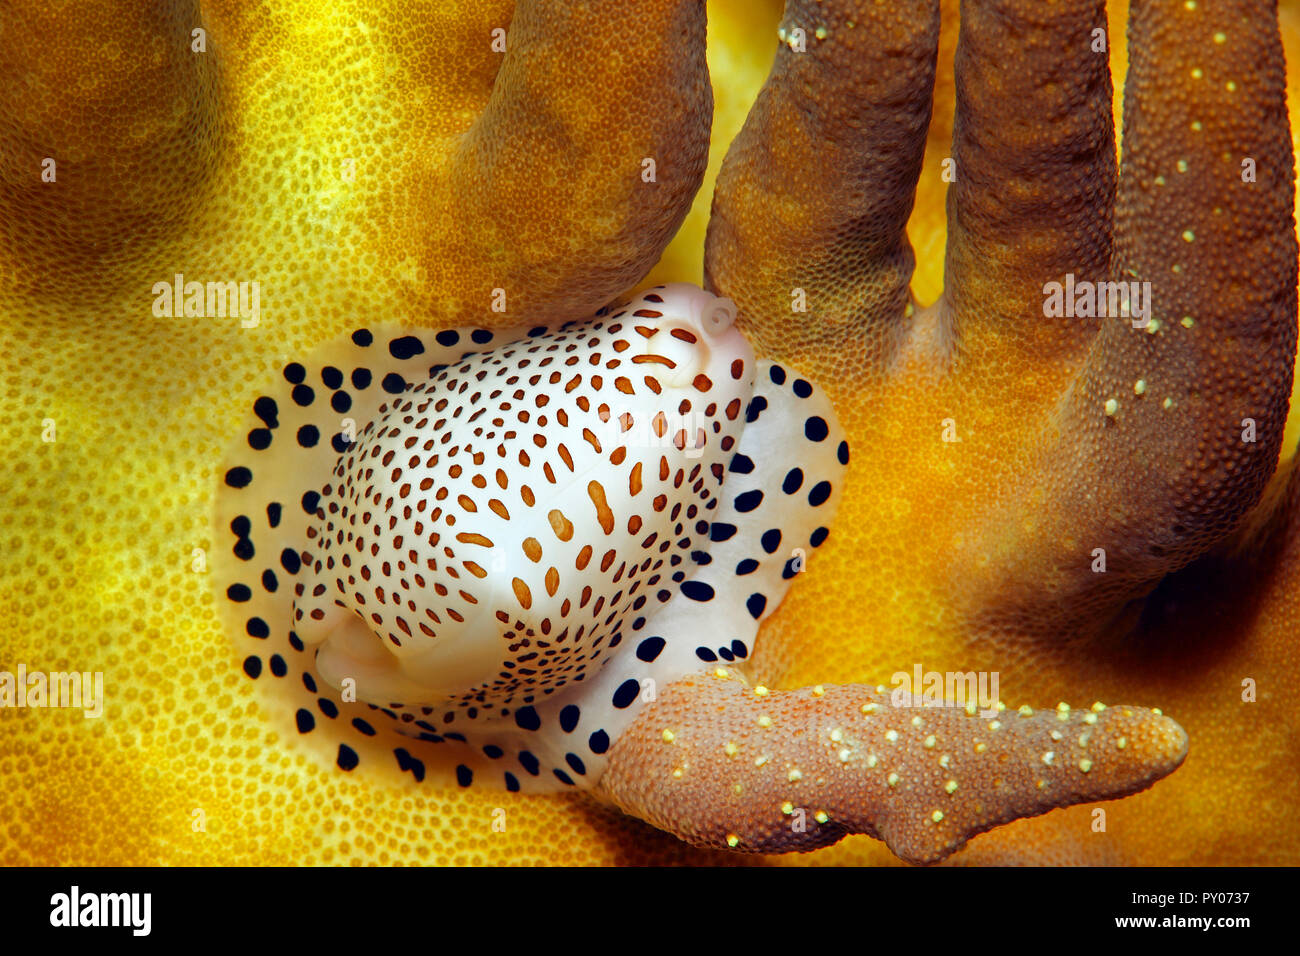 Common calpurnus, Umbilical Egg Shell or Warty/Little Egg Cowry (Calpurnus verrucosus), feeding on a leather coral, Sabang Beach, Mindoro, Philippines Stock Photo